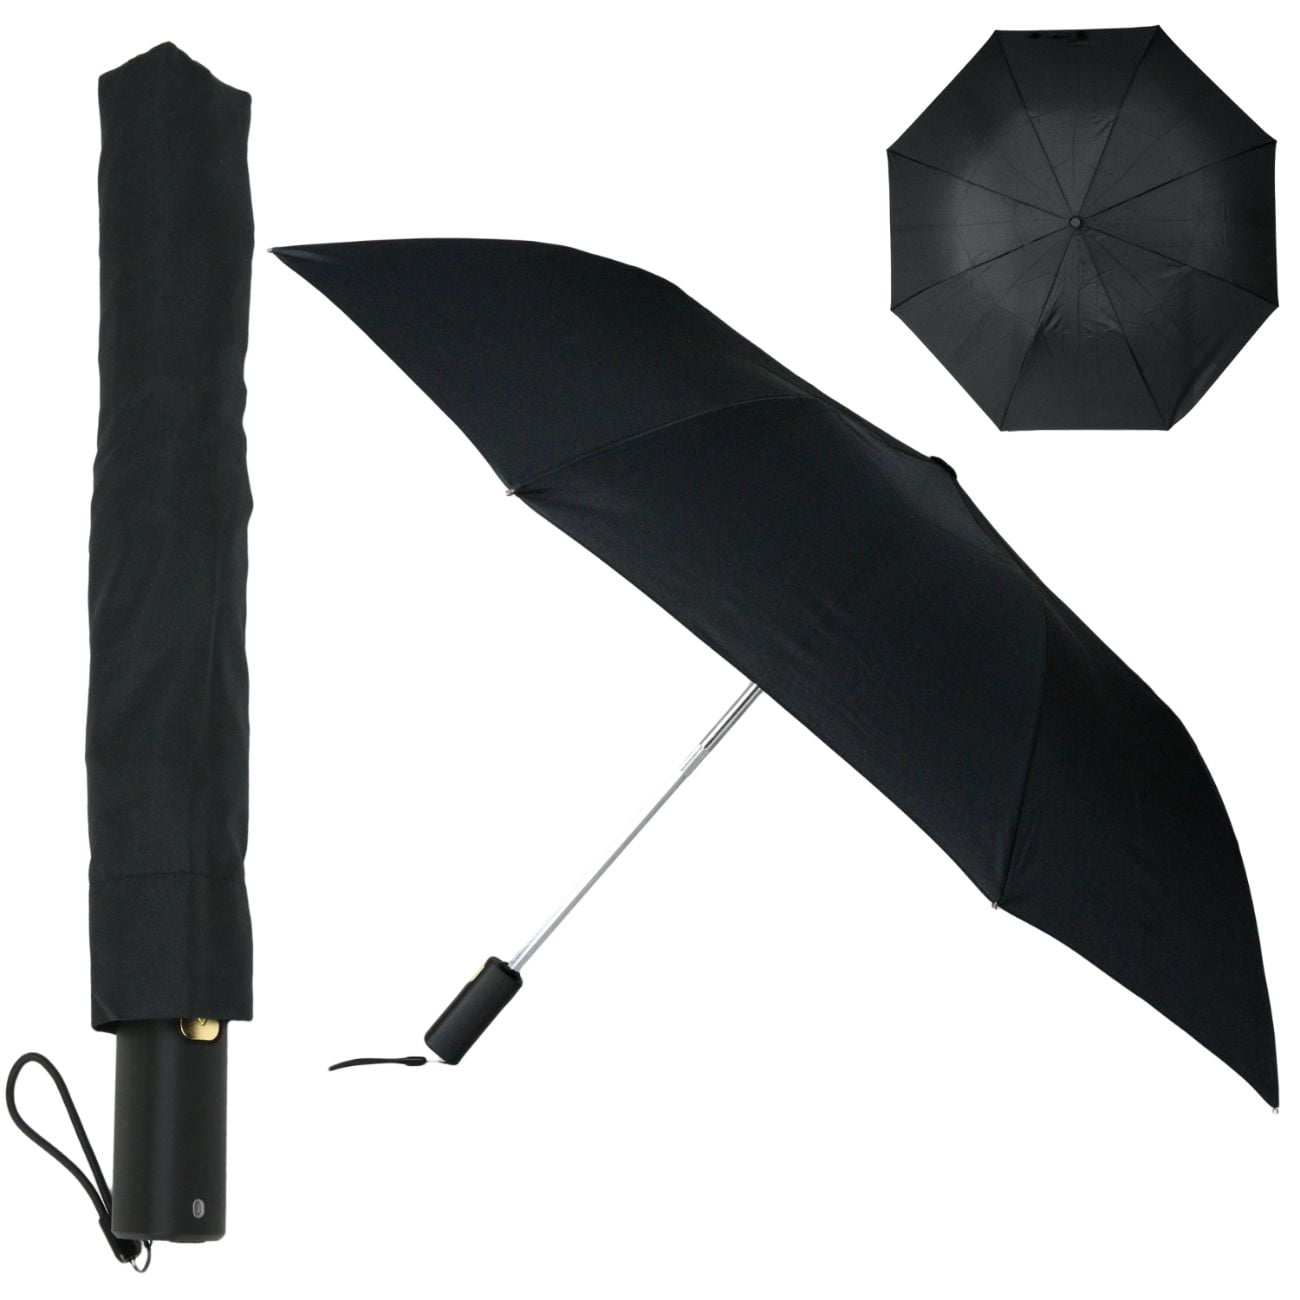 Black electric umbrella